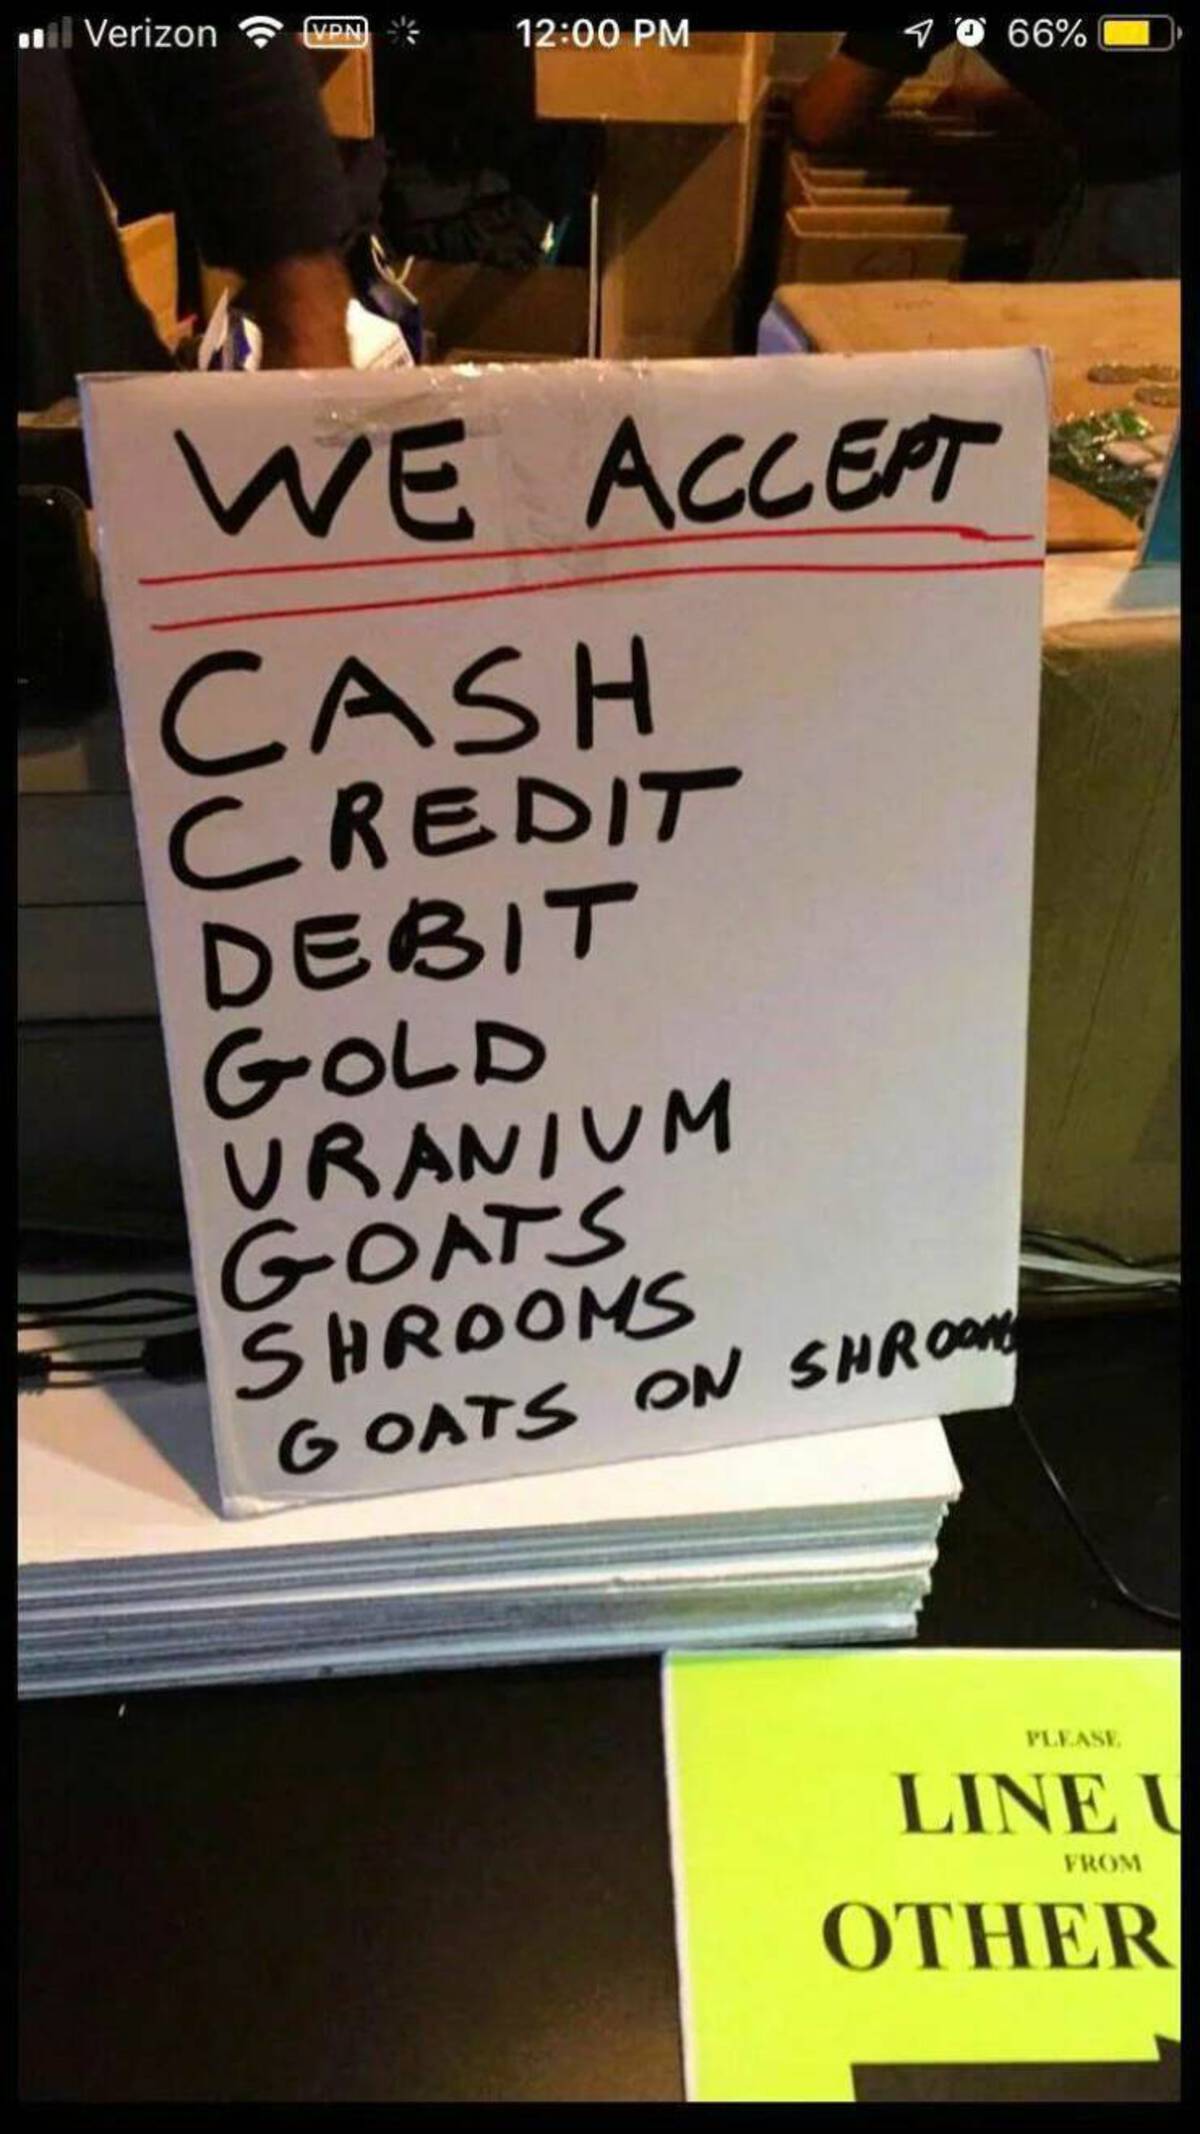 handwriting - Verizon Vdn 4066% We Accept Cash Credit Debit Gold Uranium Goats Shrooms Goats On Shroom Please Line U From Other